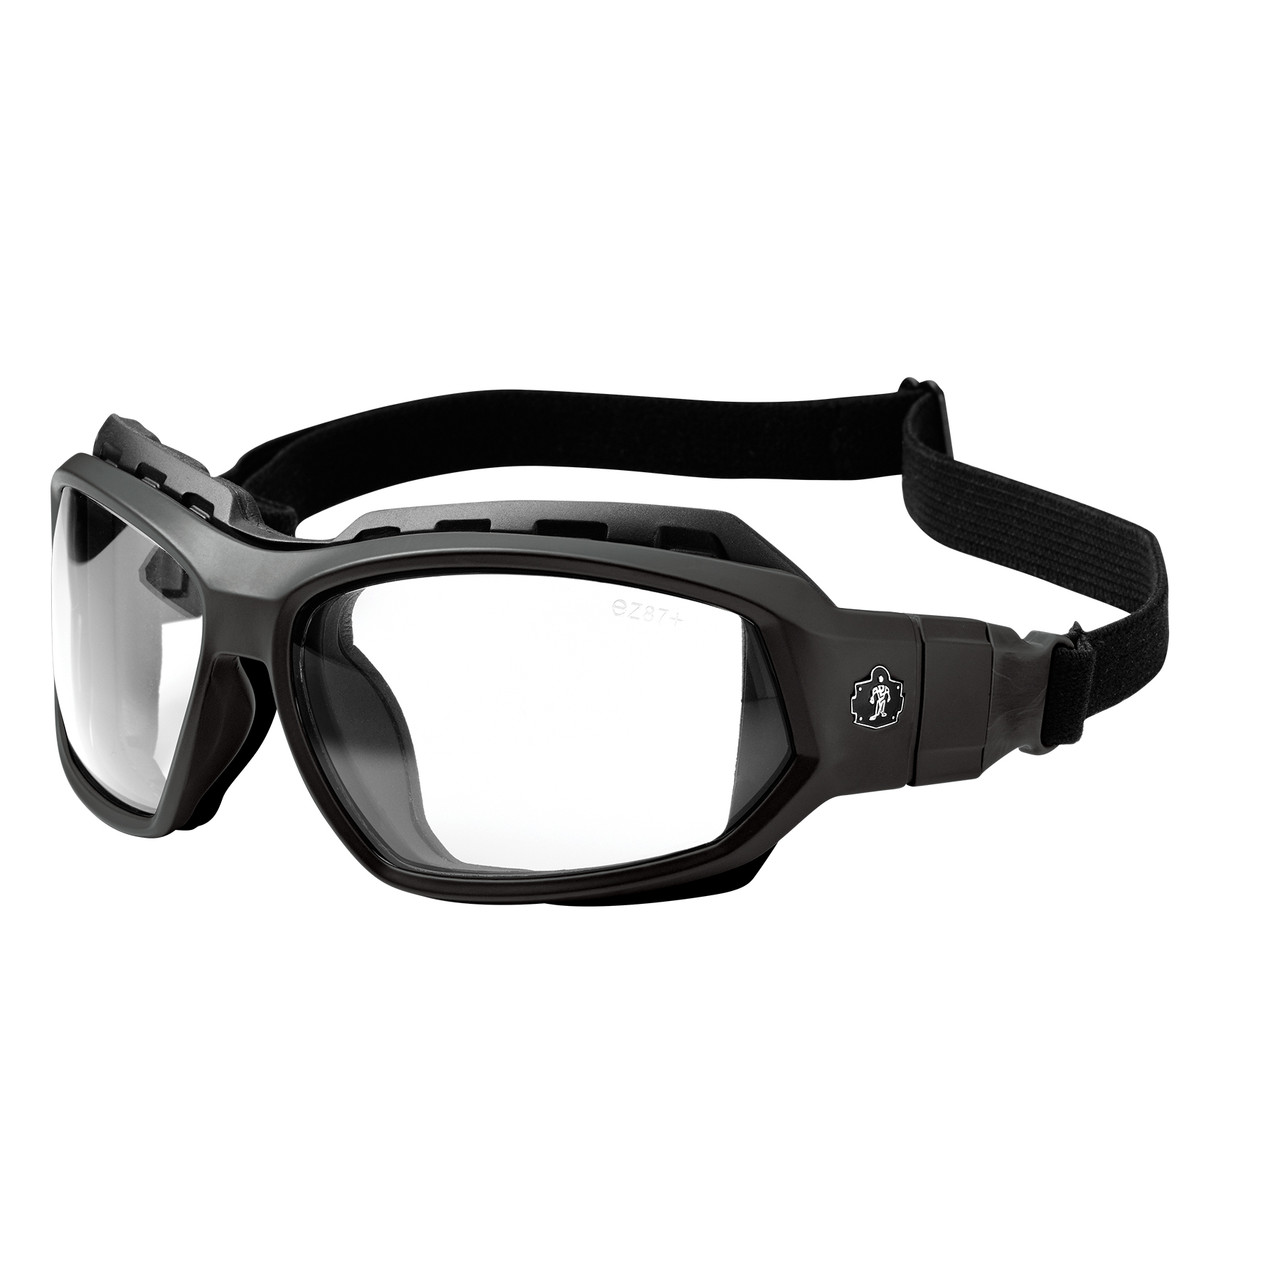 Ergodyne Skullerz Loki Anti-Fog Safety Sunglasses Goggles - Matte Gray Fr -  シューズ